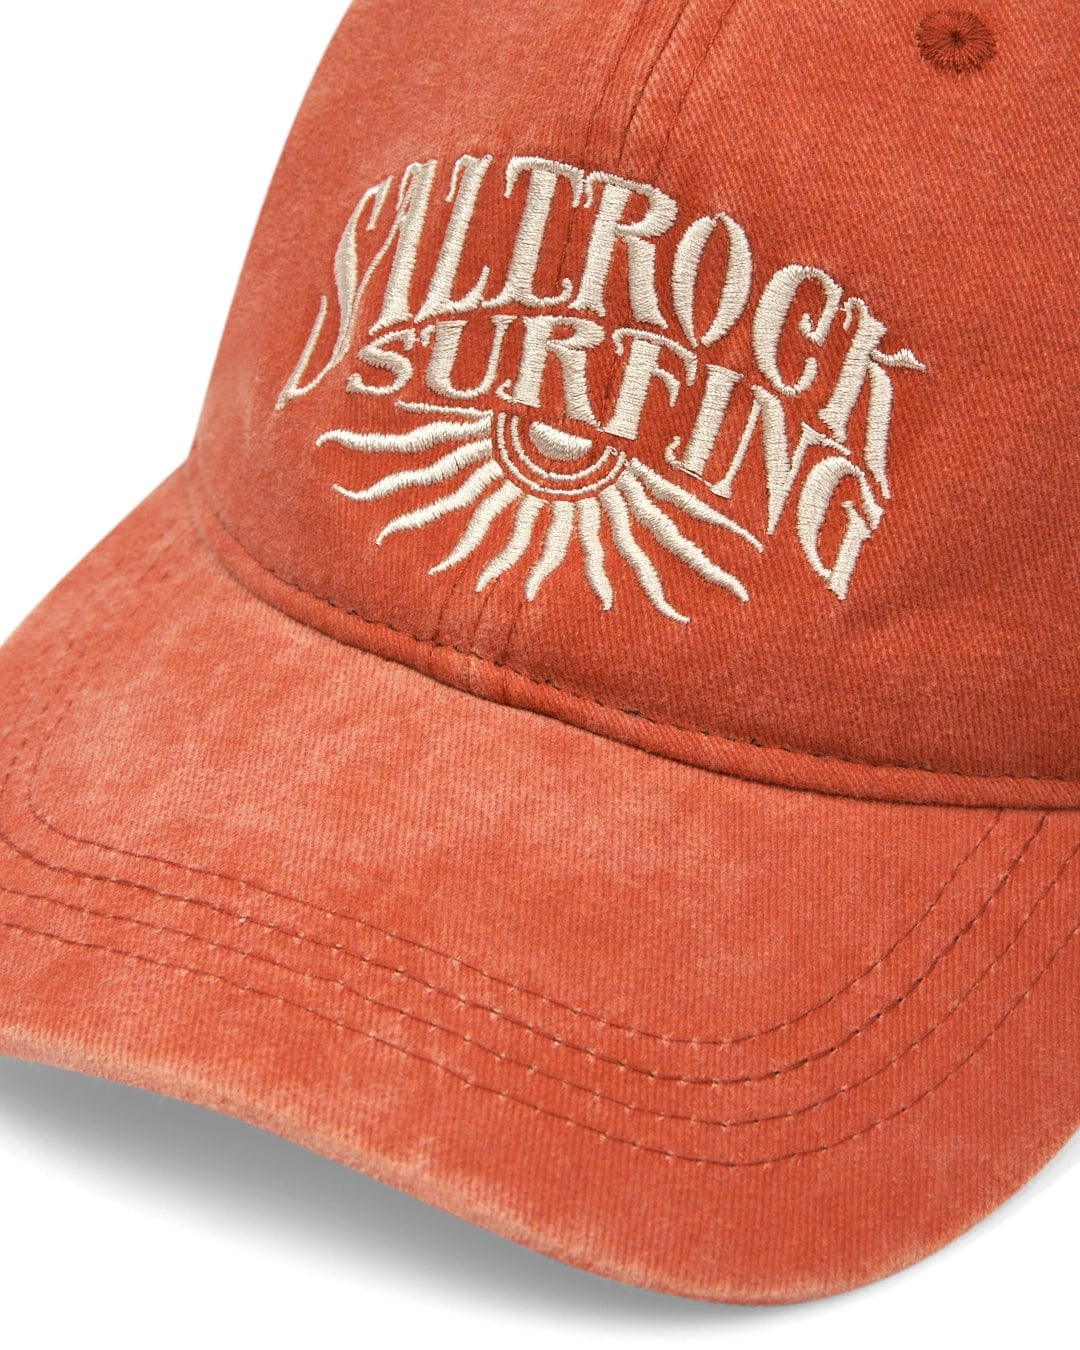 Adults Sunburst cap from Saltrock in washed look Burnt Orange with embroidered sunburst logo.